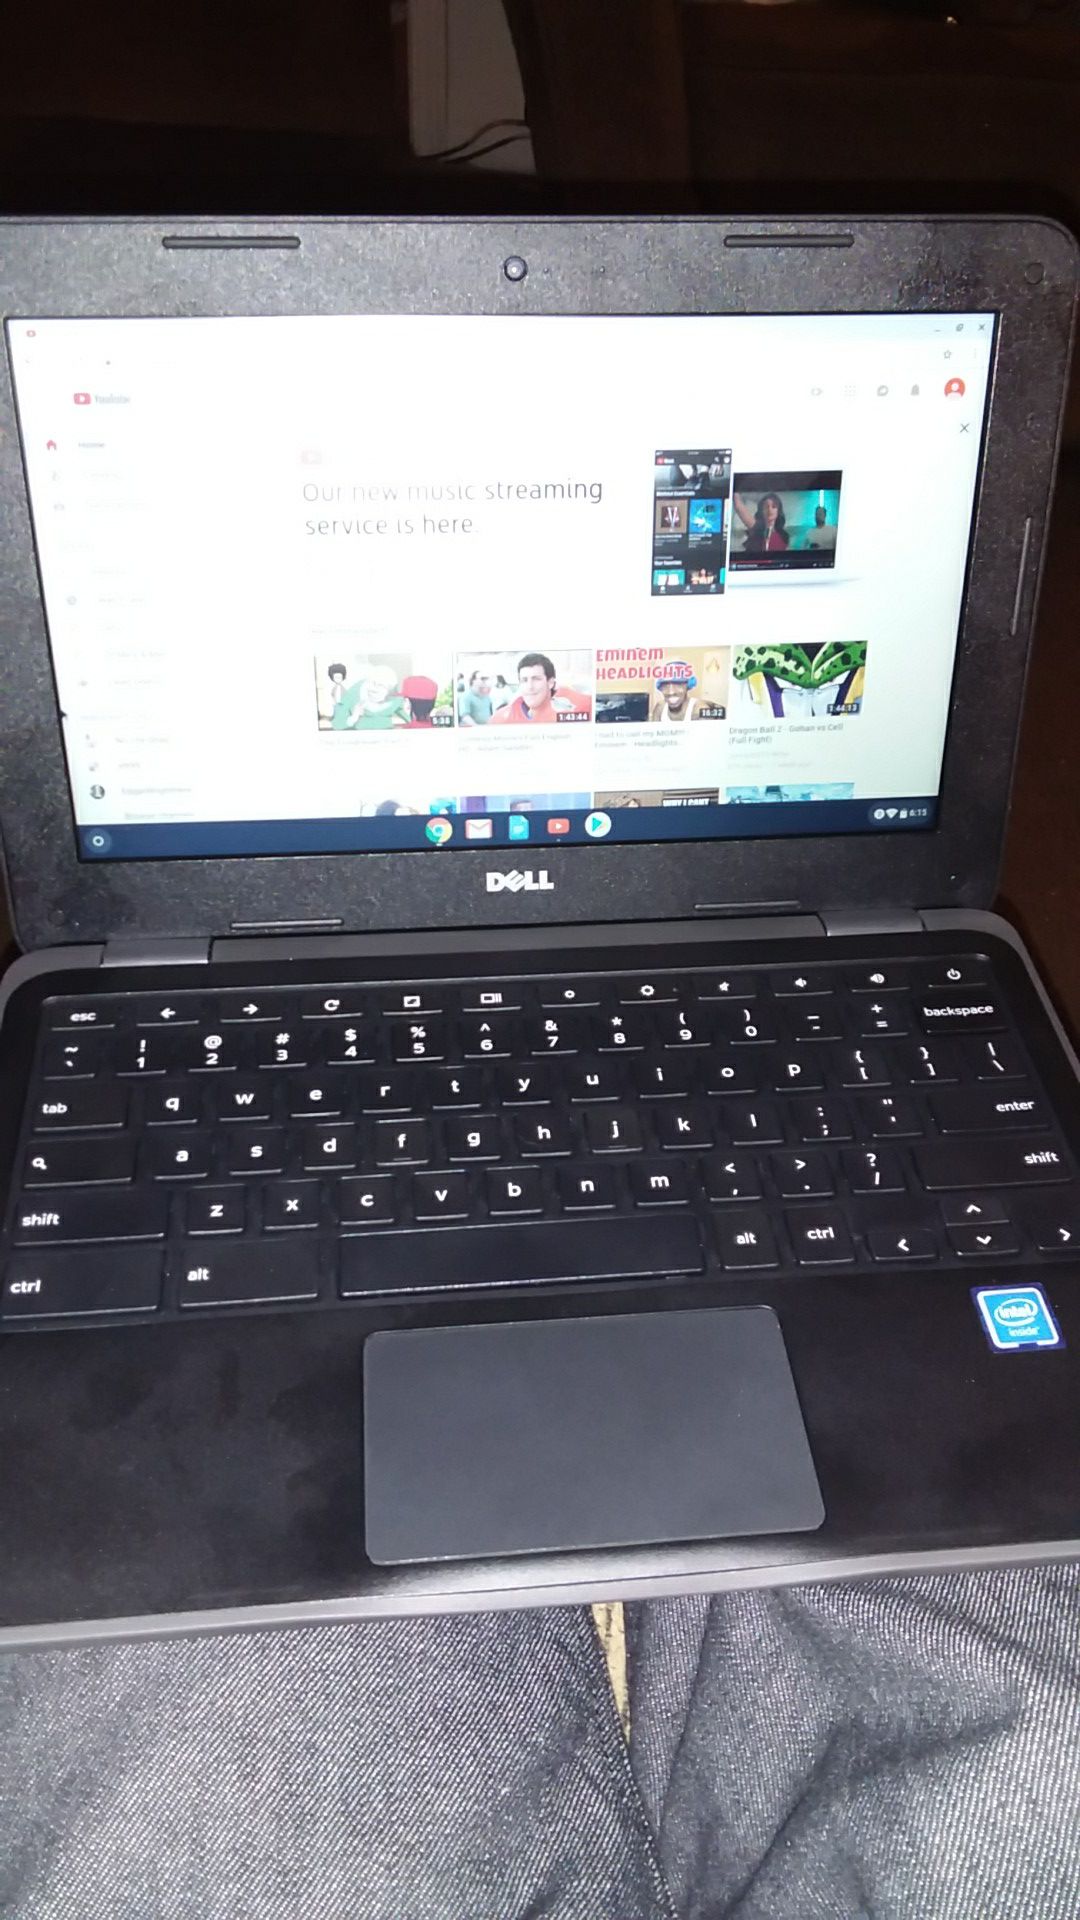 Laptop: Dell 116 Chromebook Intel Celeron 4GB Memory 16GB eMMC Flash Memory Black.